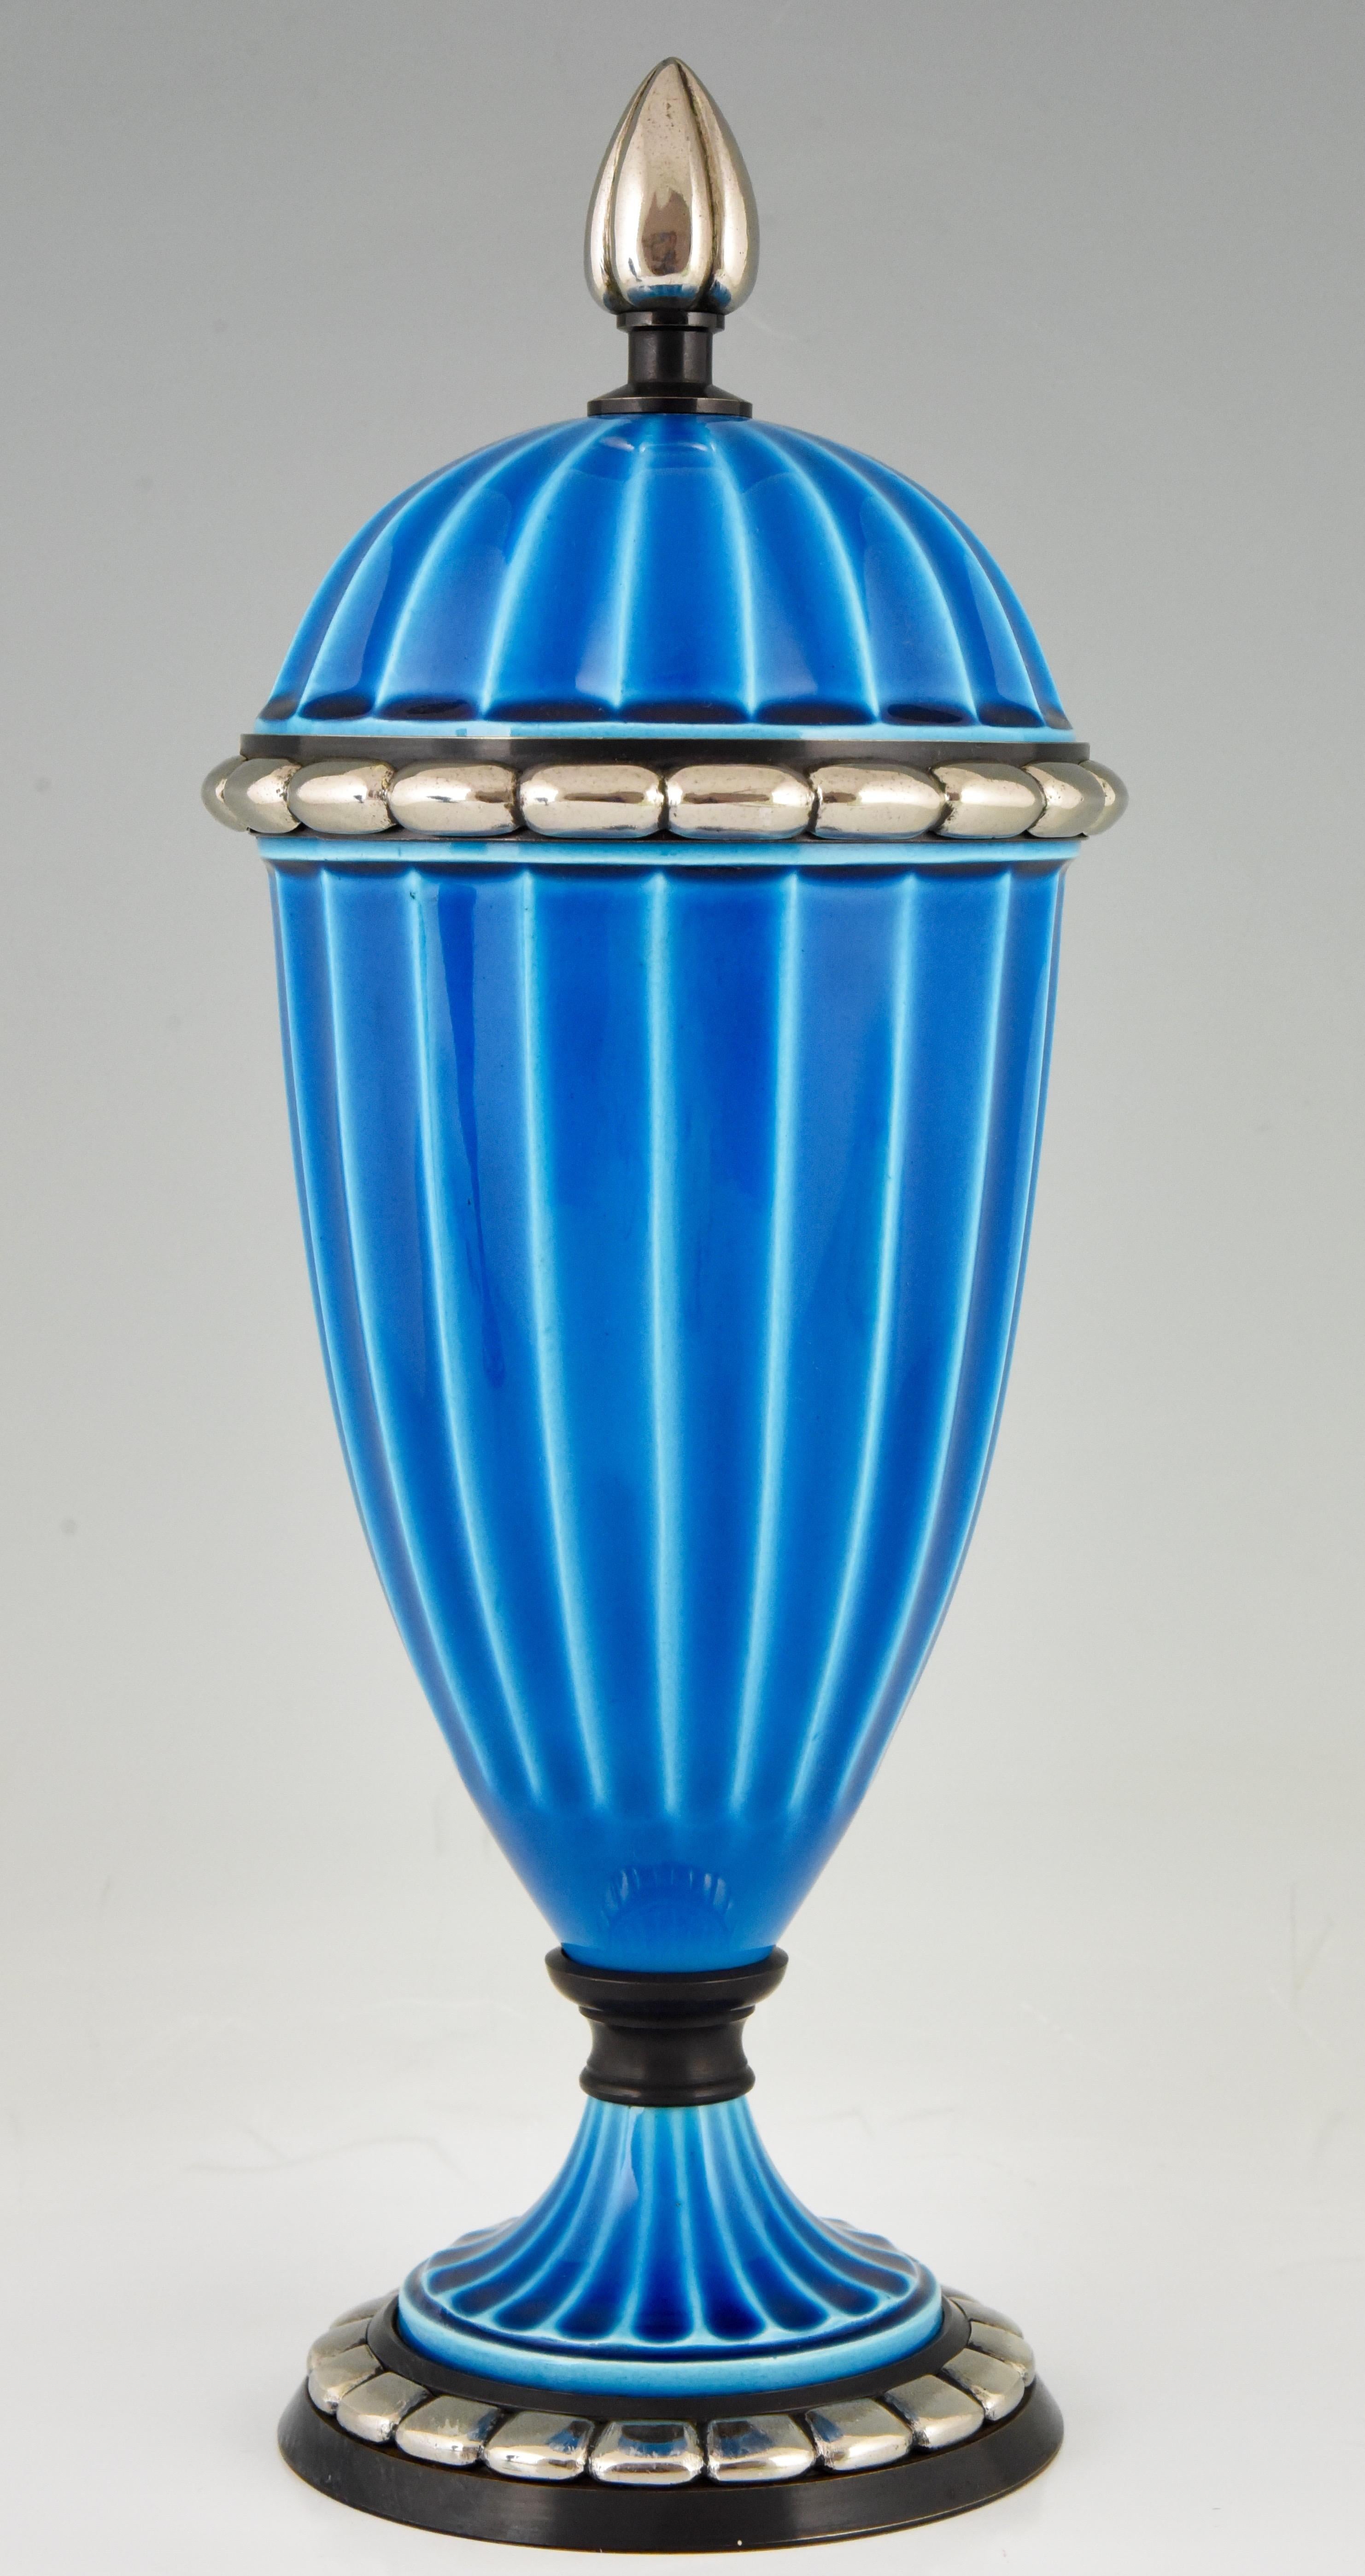 20th Century Pair of Art Deco Ceramic Vases or Urns with Blue Glaze Paul Milet for Sèvres